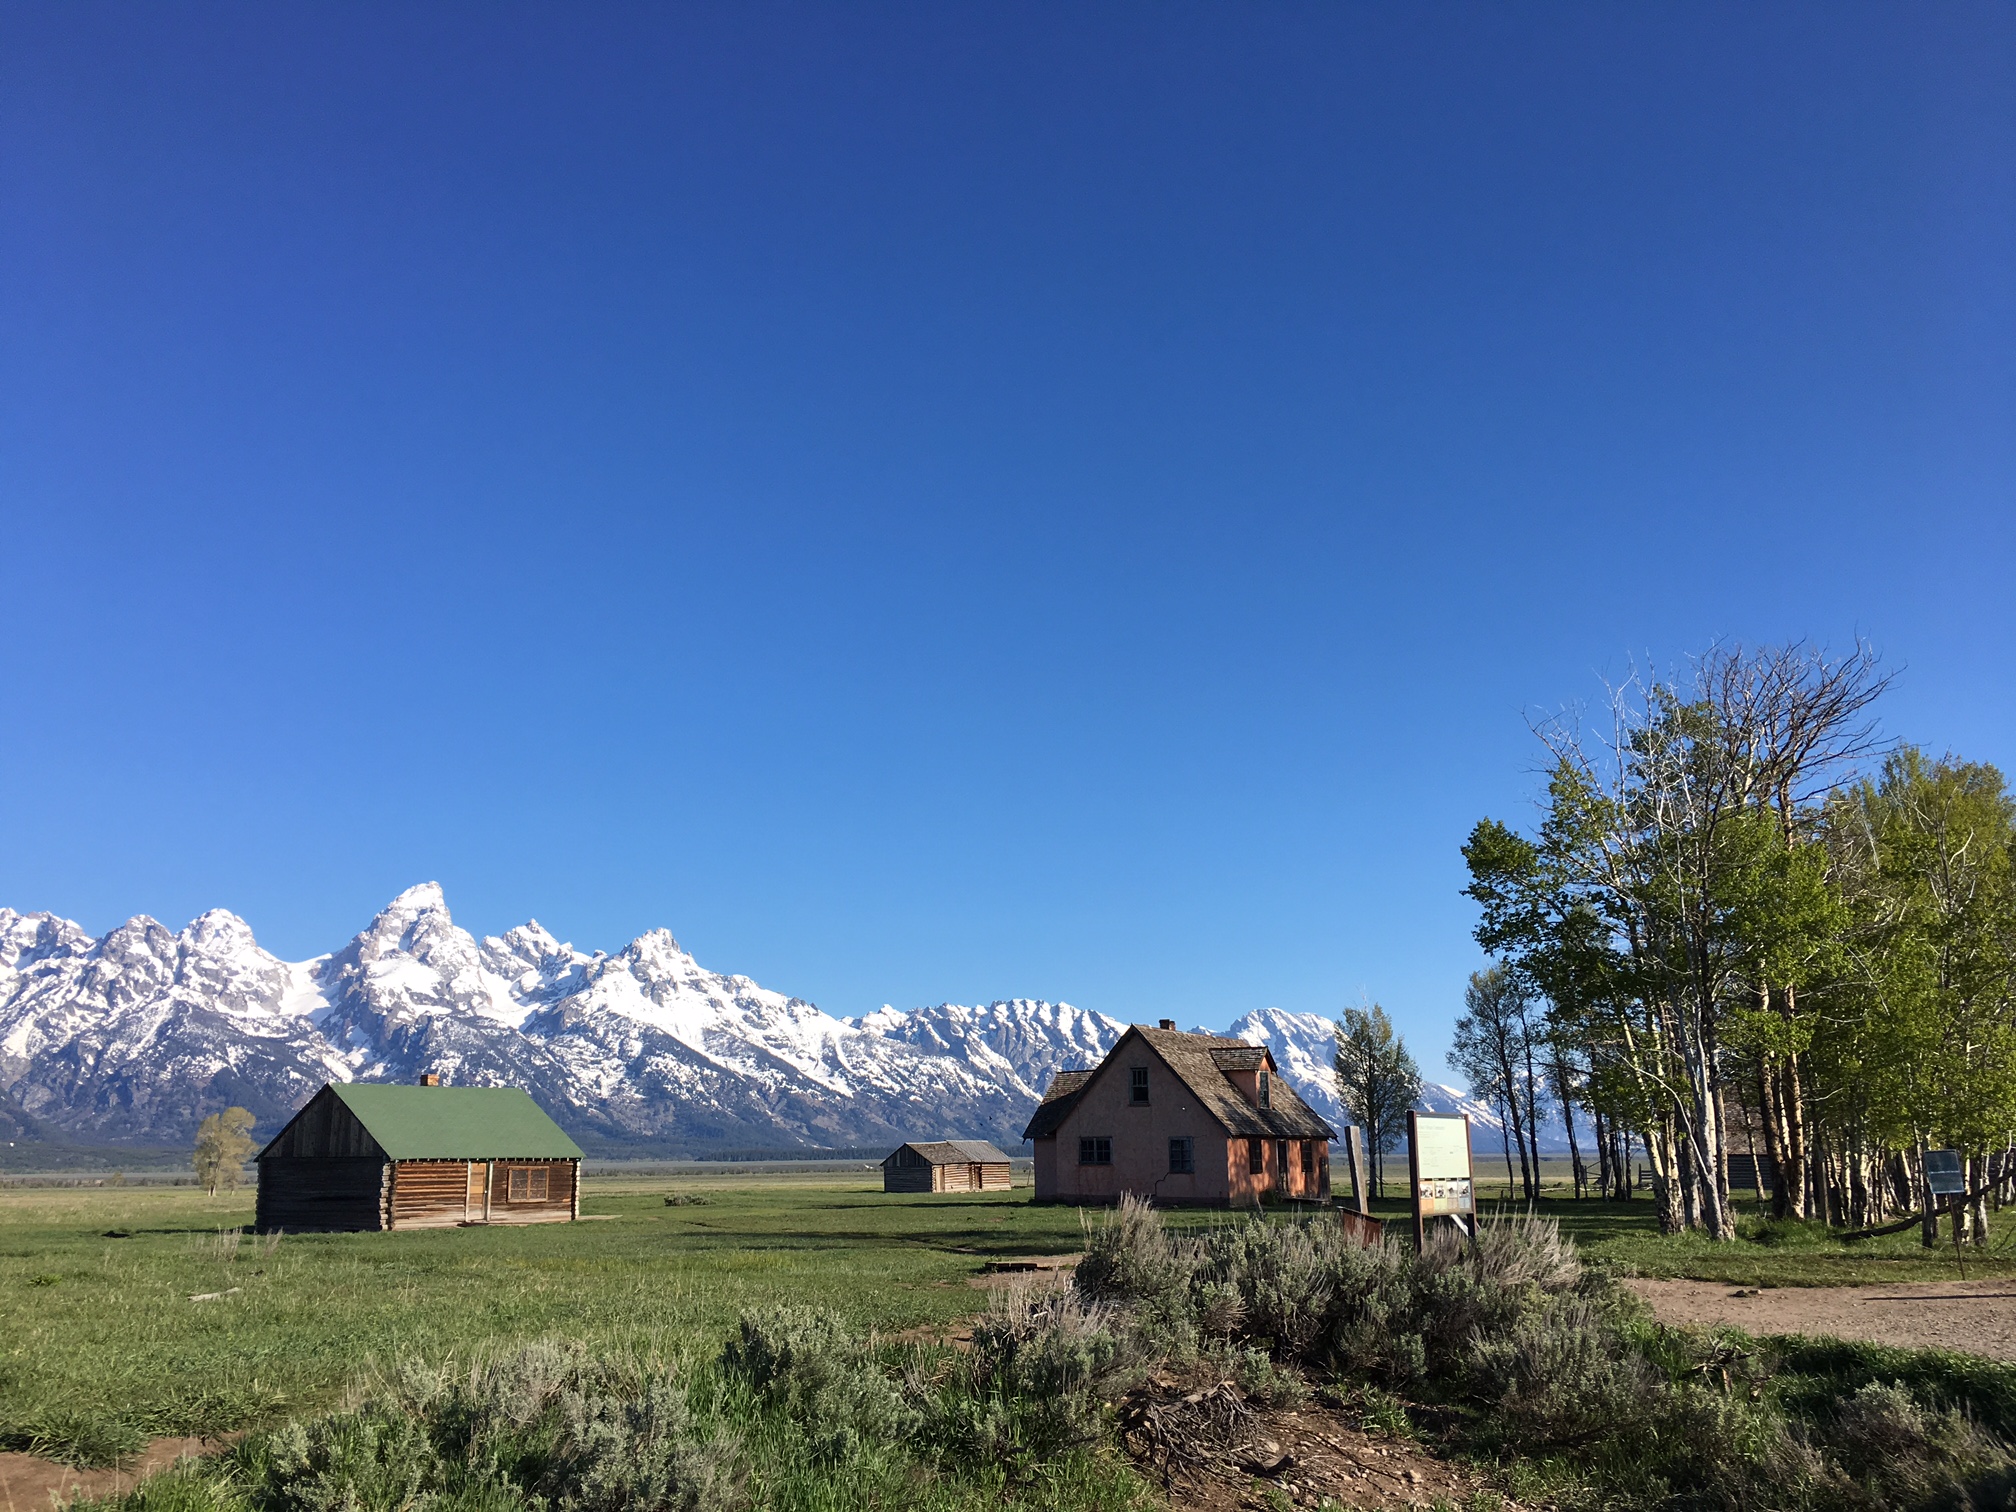 Vegan Travel - A Day in Wyoming's Grand Teton National Park